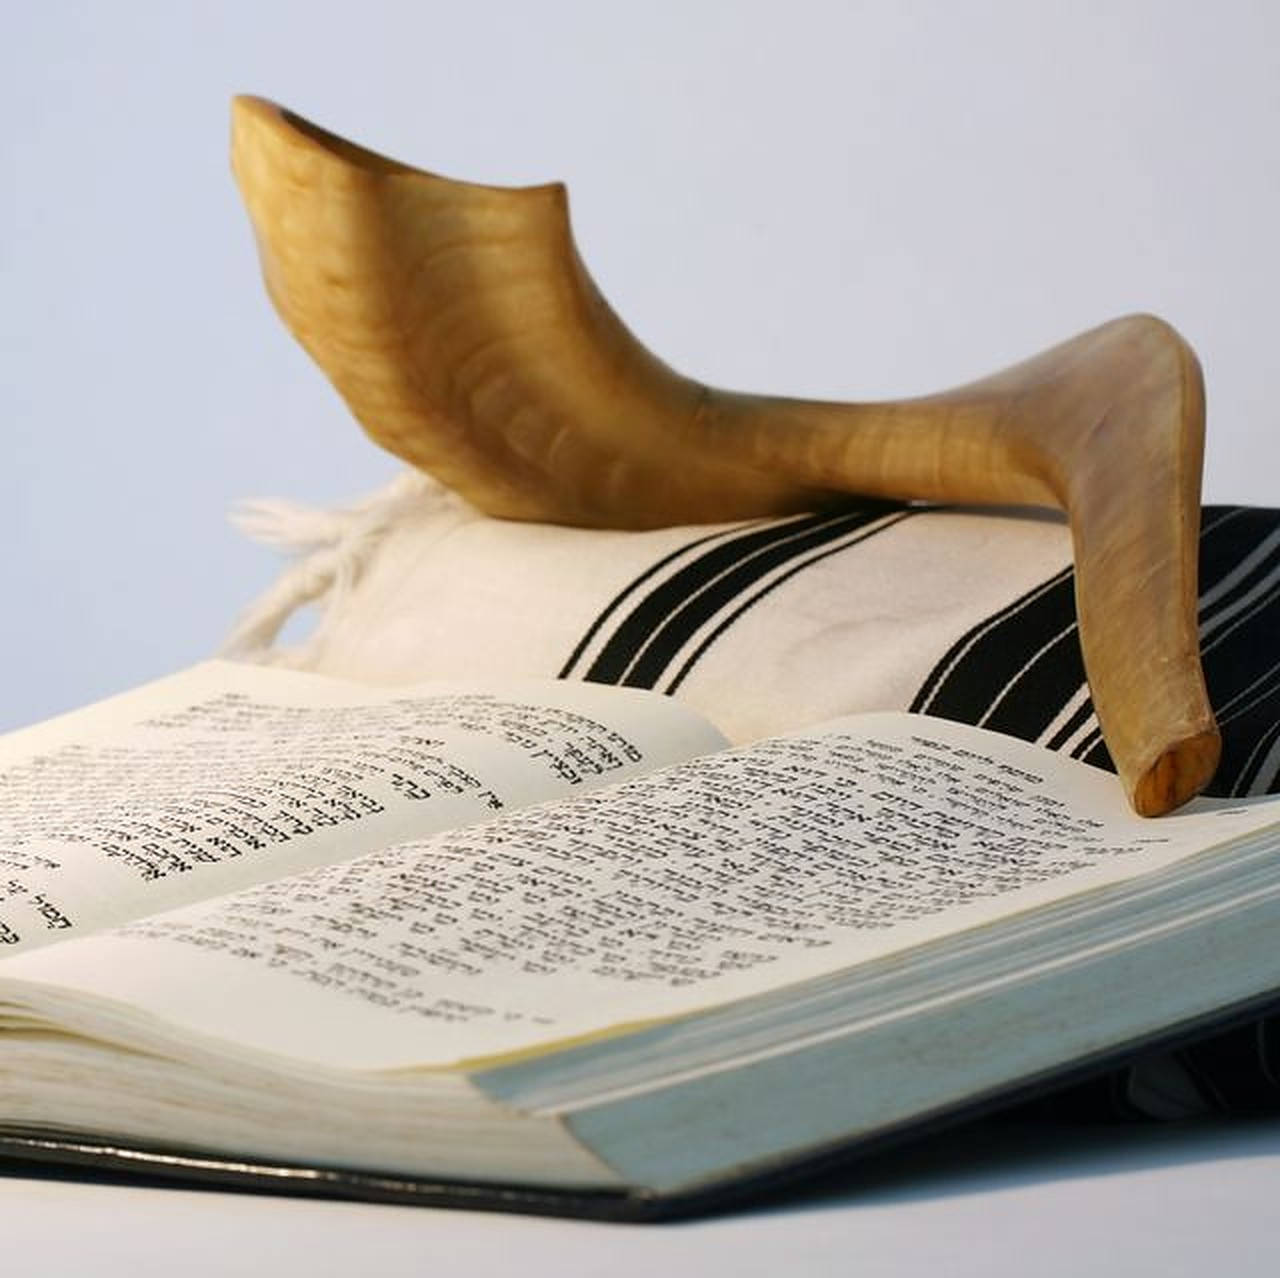 Yom Kippur Horn And Book Background